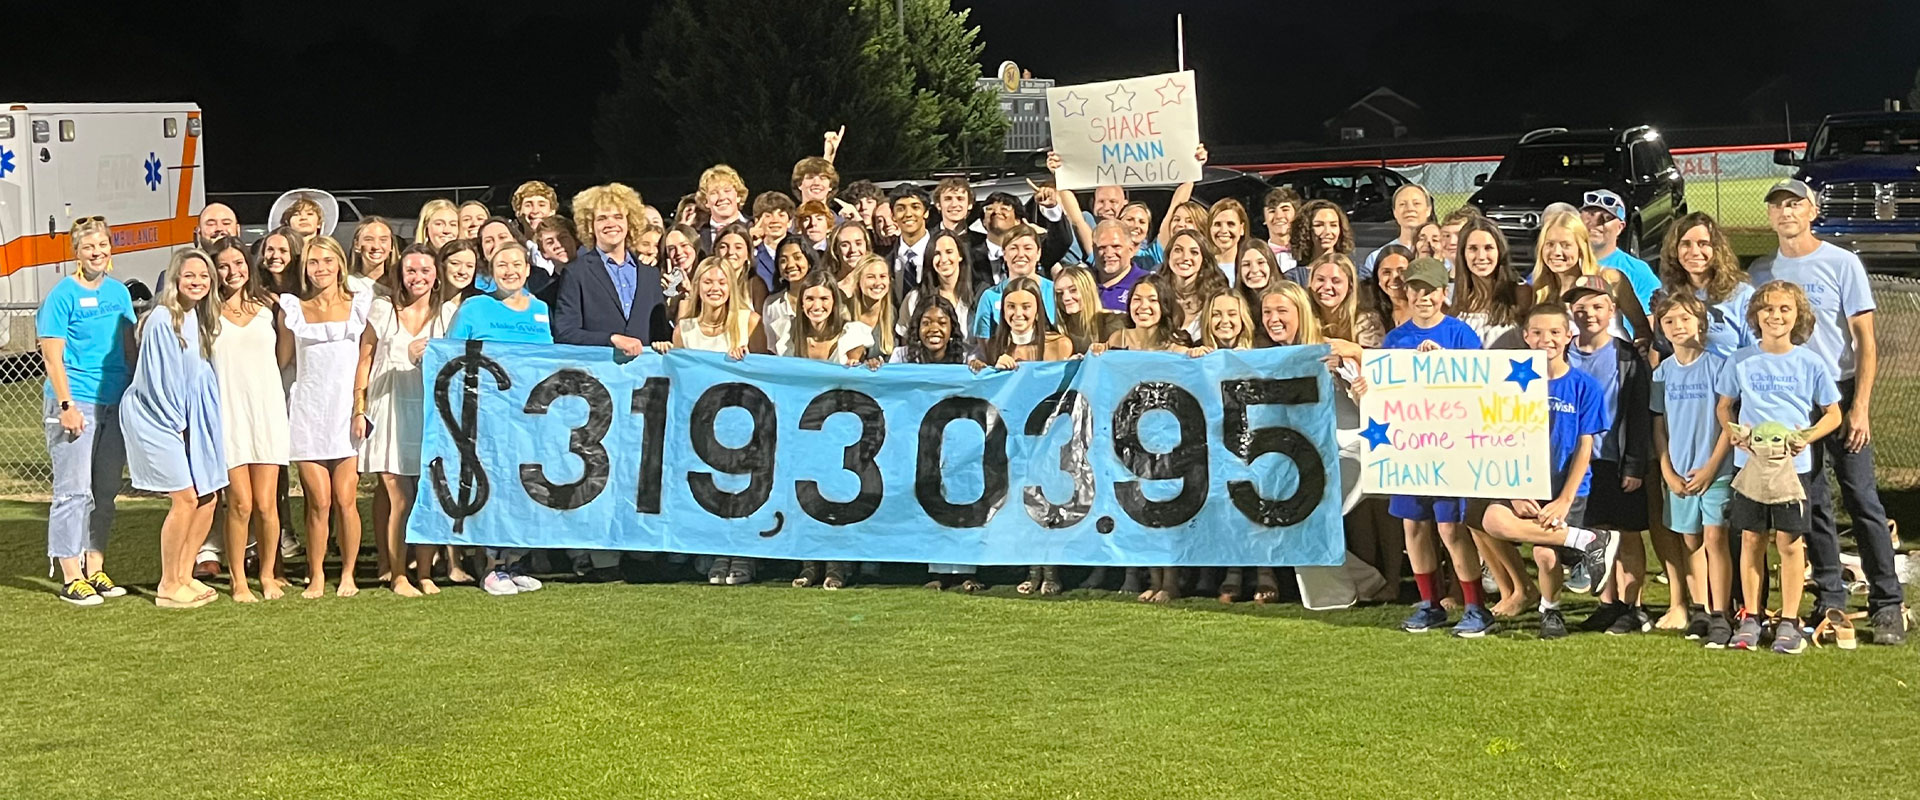 J.L. Mann High School raises a record $319,303 during Spirit Week to benefit TD SYNNEX Share the Magic